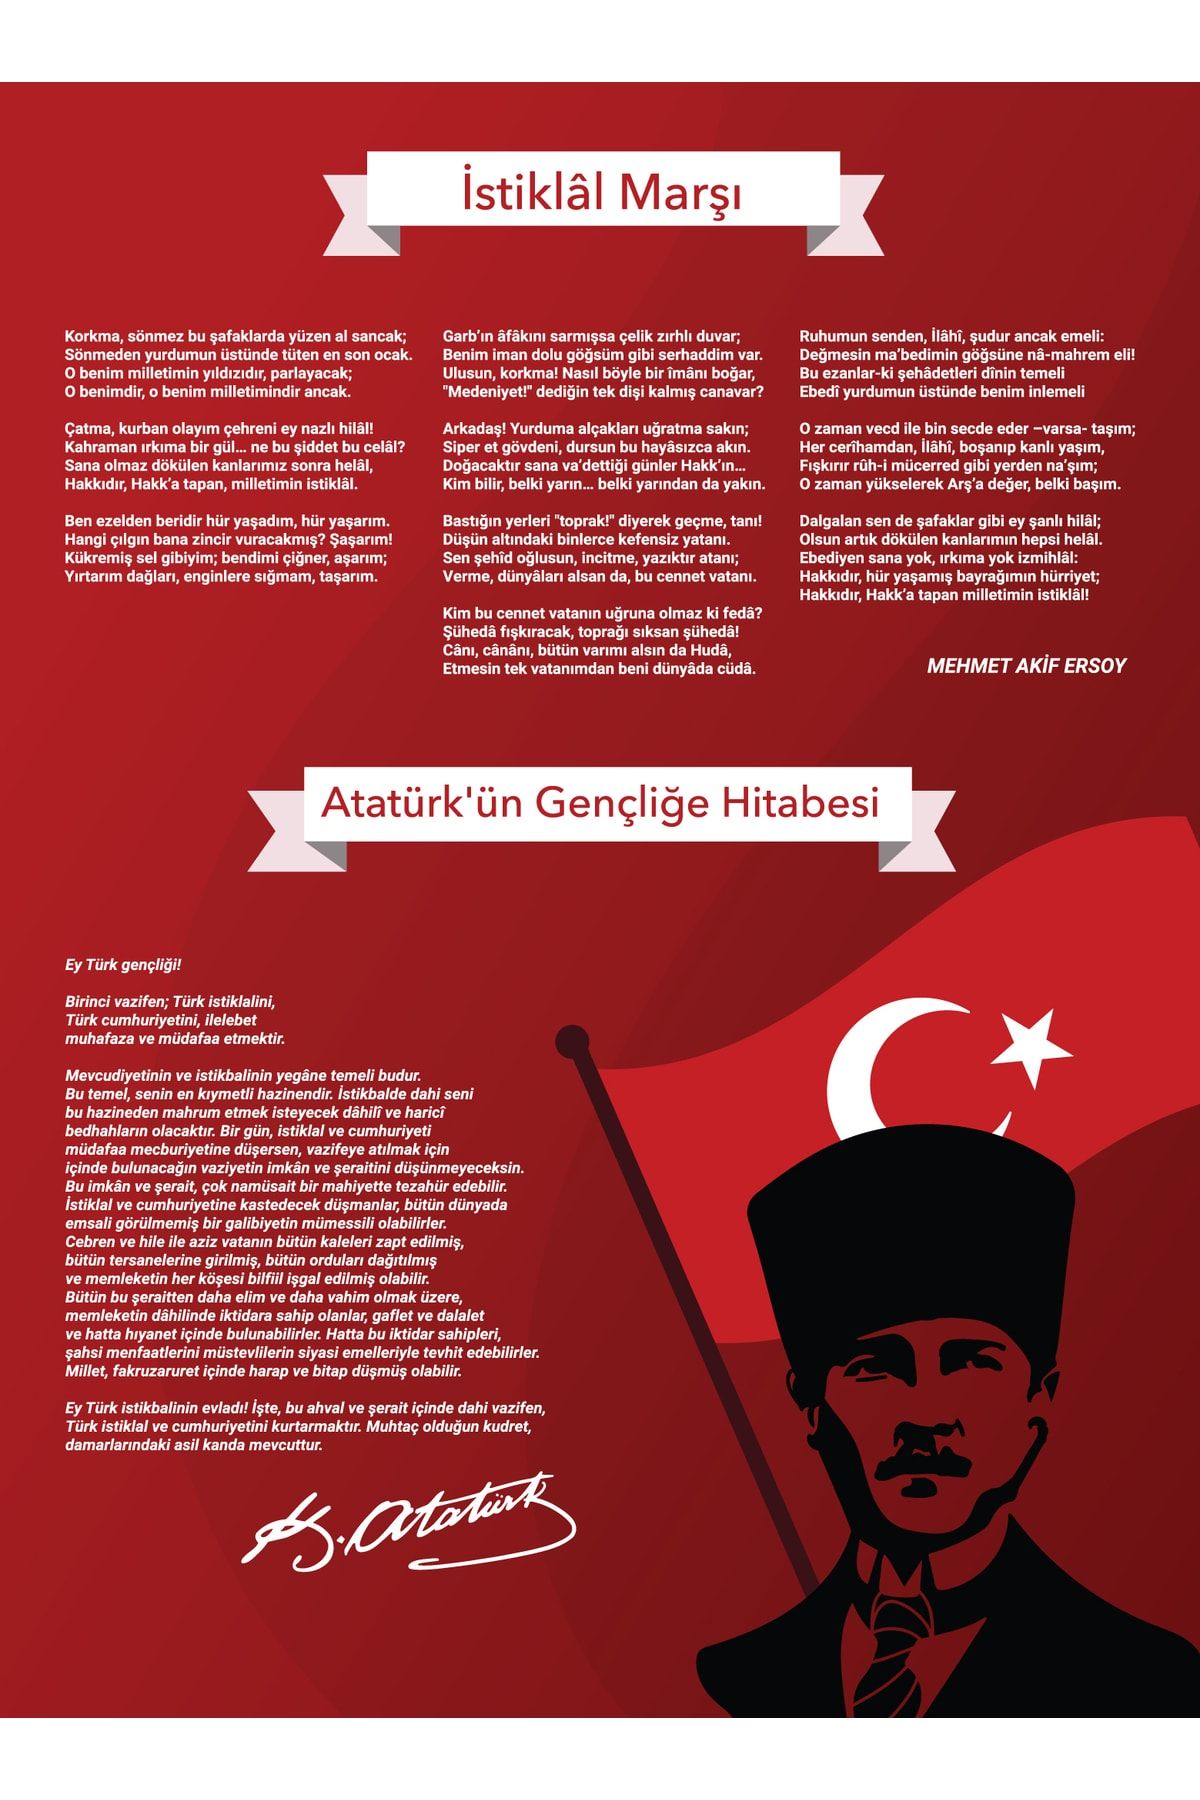 Malinka Istiklal Marşı & Atatürk'ün Gençliğe Hitabesi Posteri